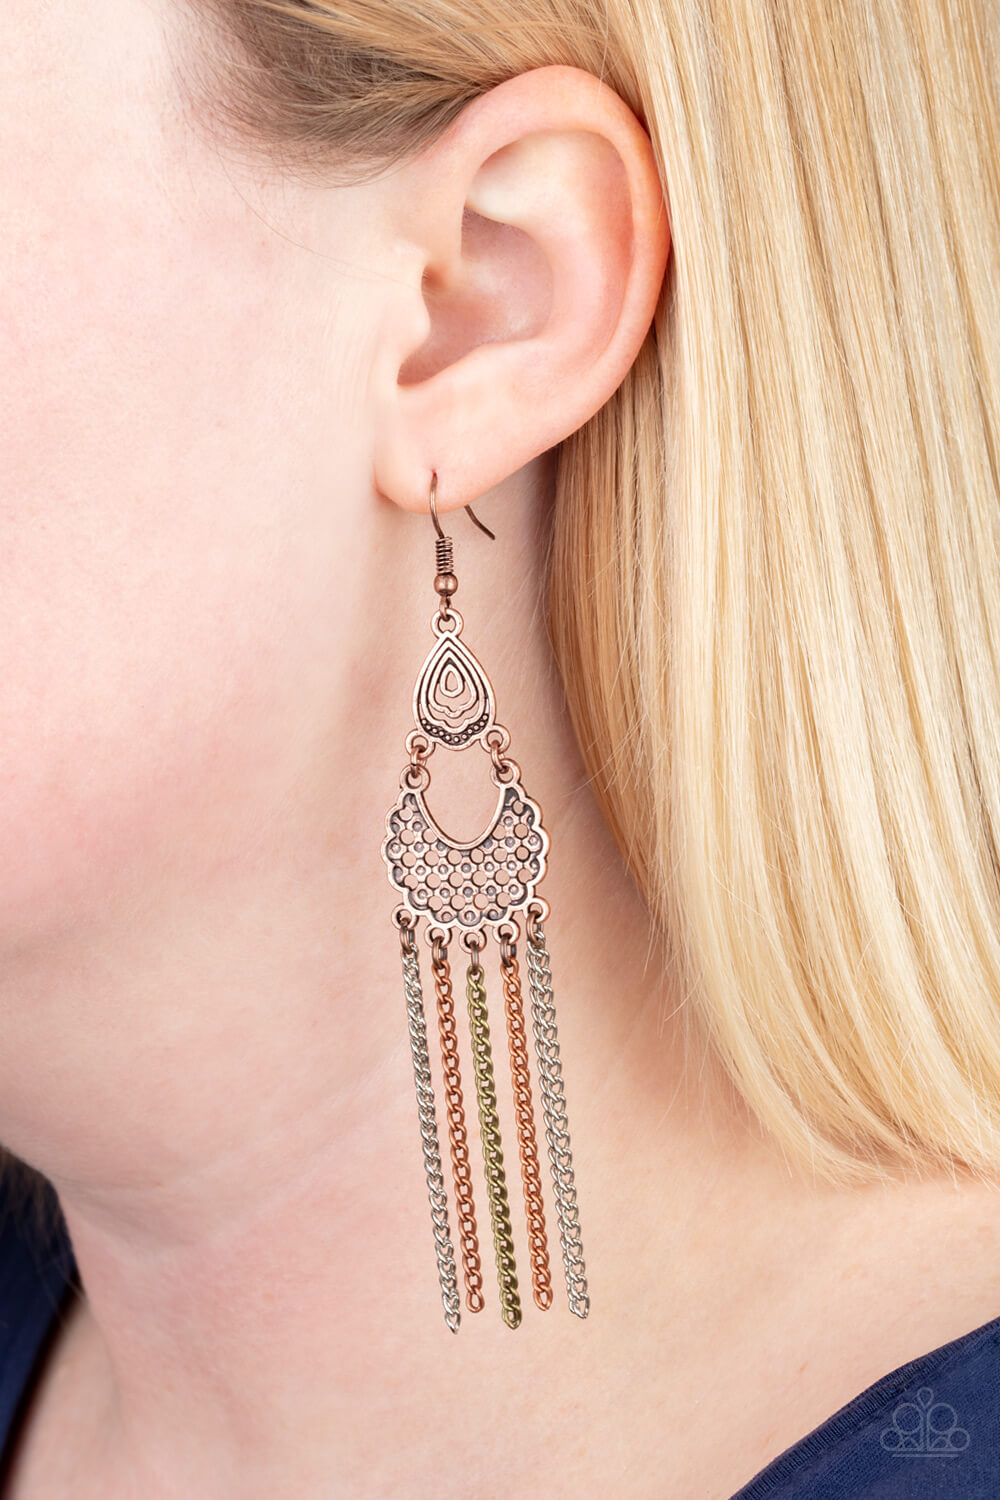 Insane Chain - Multi Copper , Brass & Silver Earrings - Princess Glam Shop